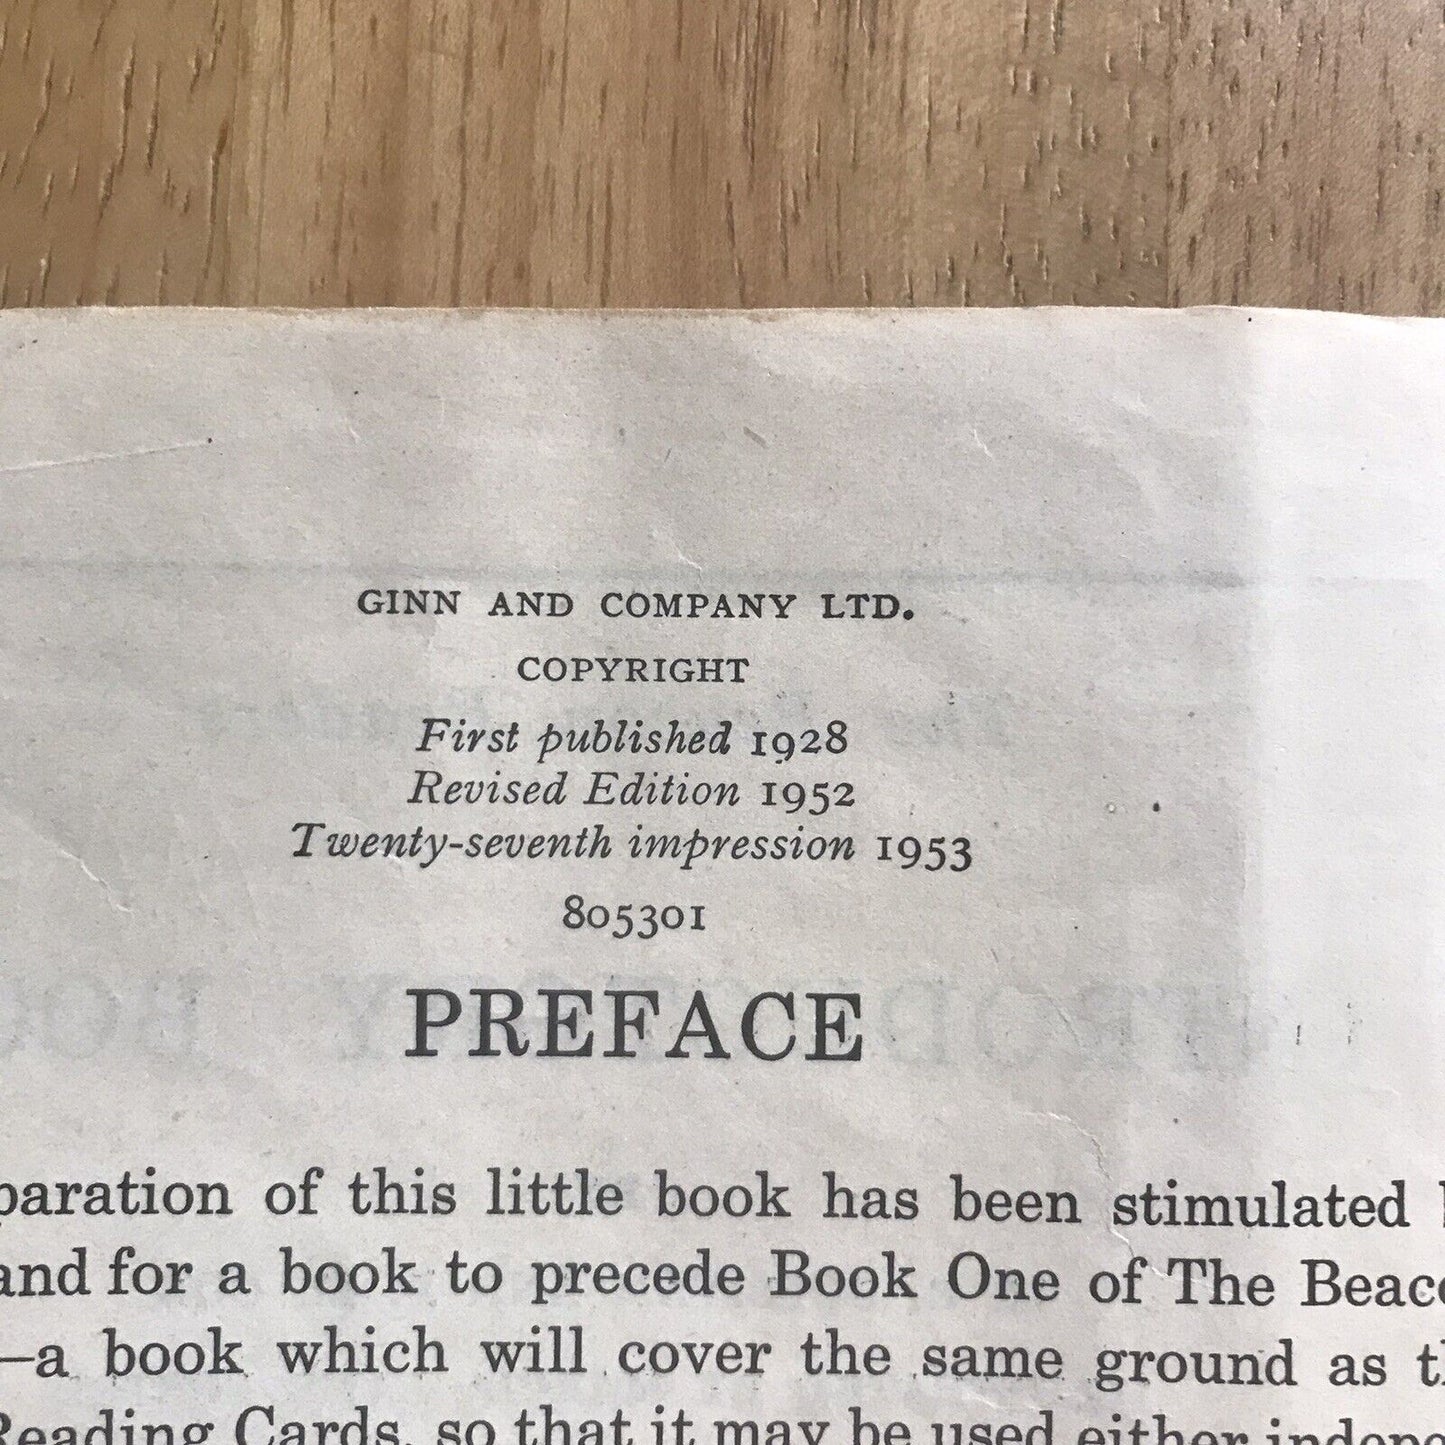 1953 Beacon Readers Einführungsbuch – ME Sullivan (Marcia Lane Foster illustra